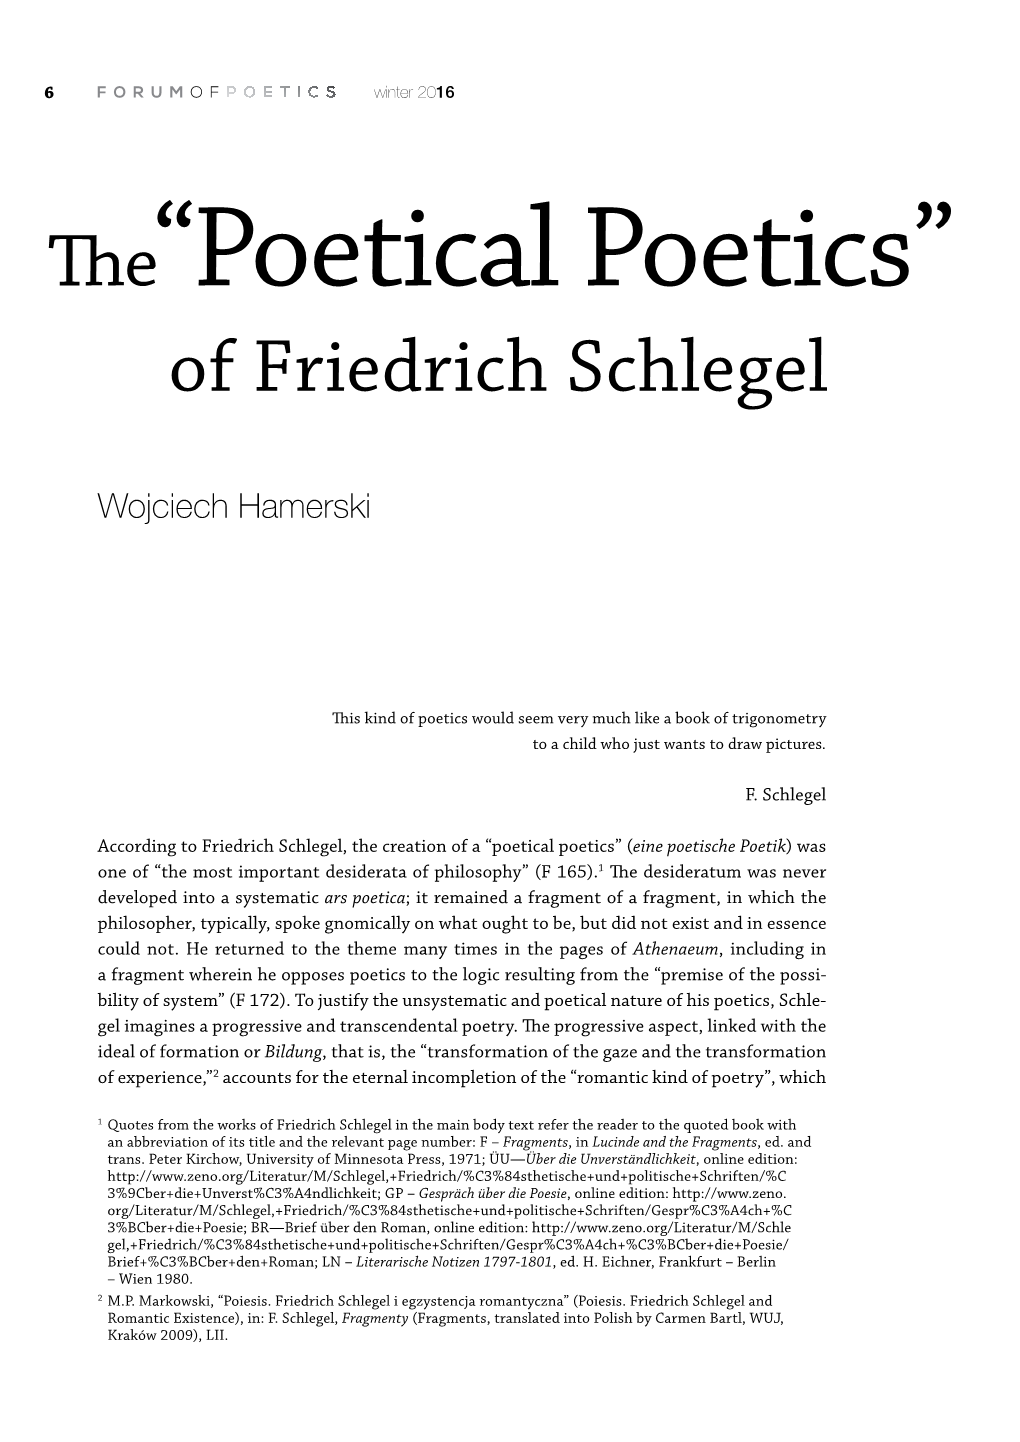 Of Friedrich Schlegel